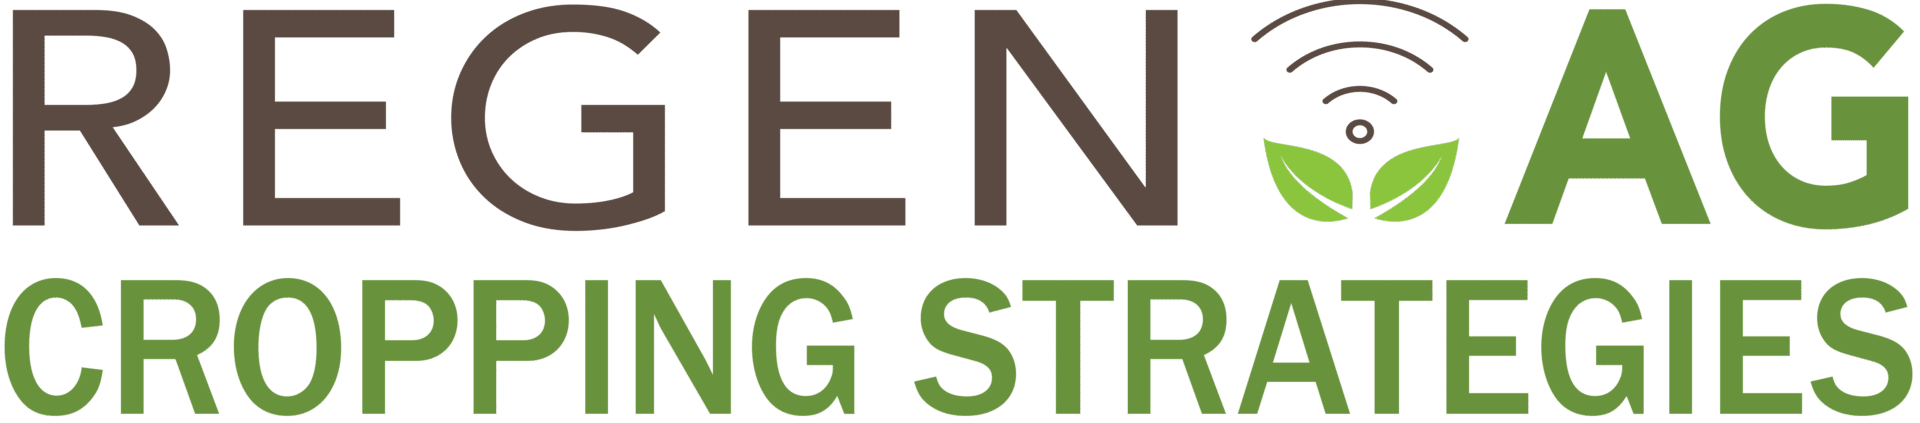 RegenAg Cropping Strategies Logo